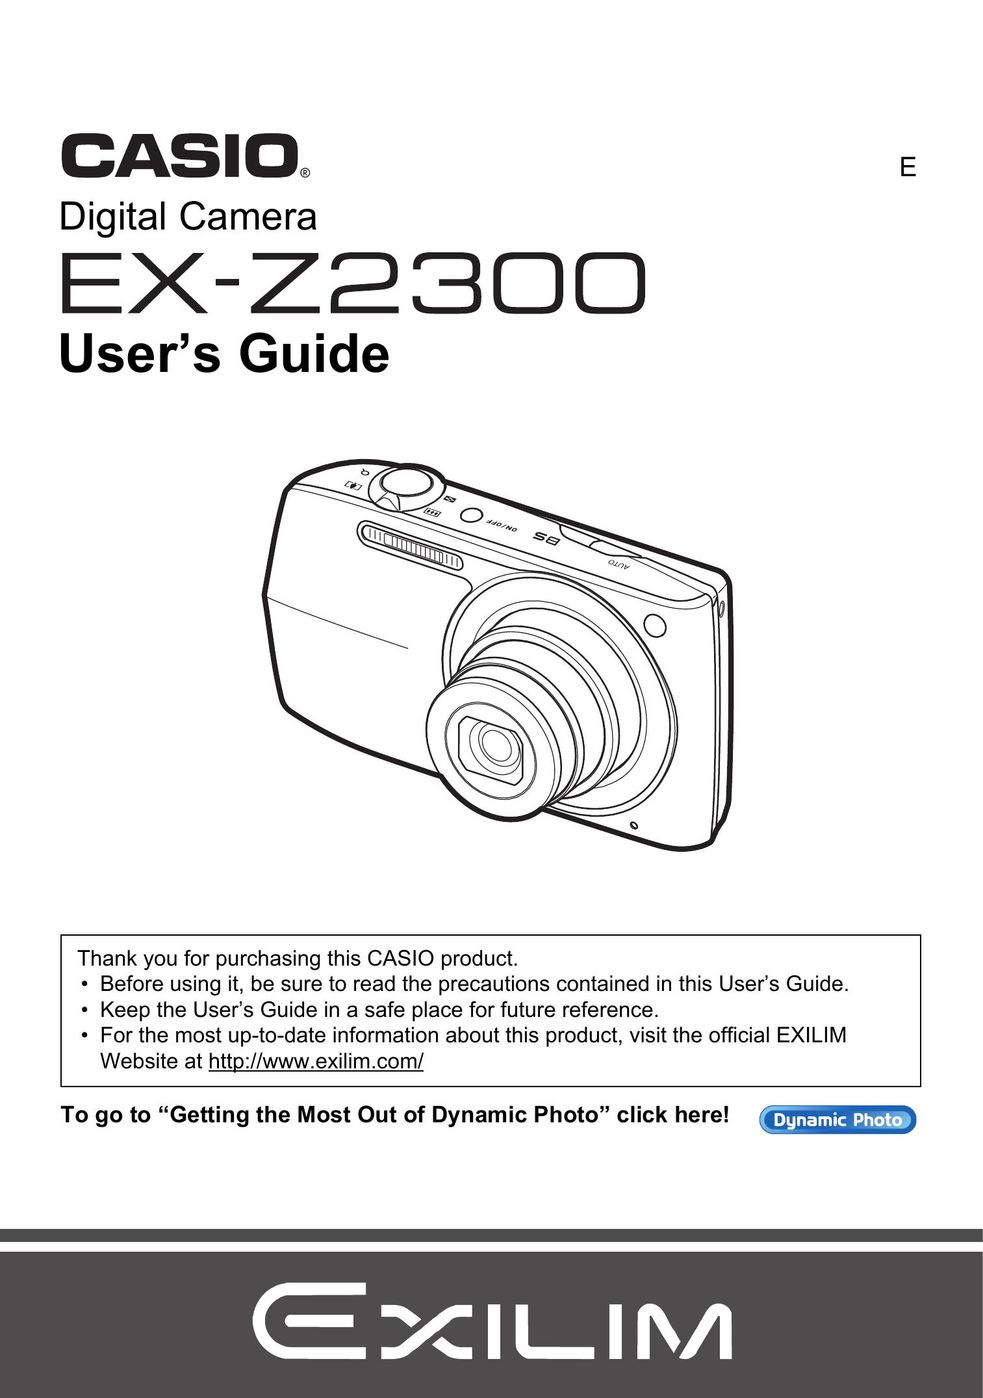 Casio EX-Z2300 Fitness Electronics User Manual